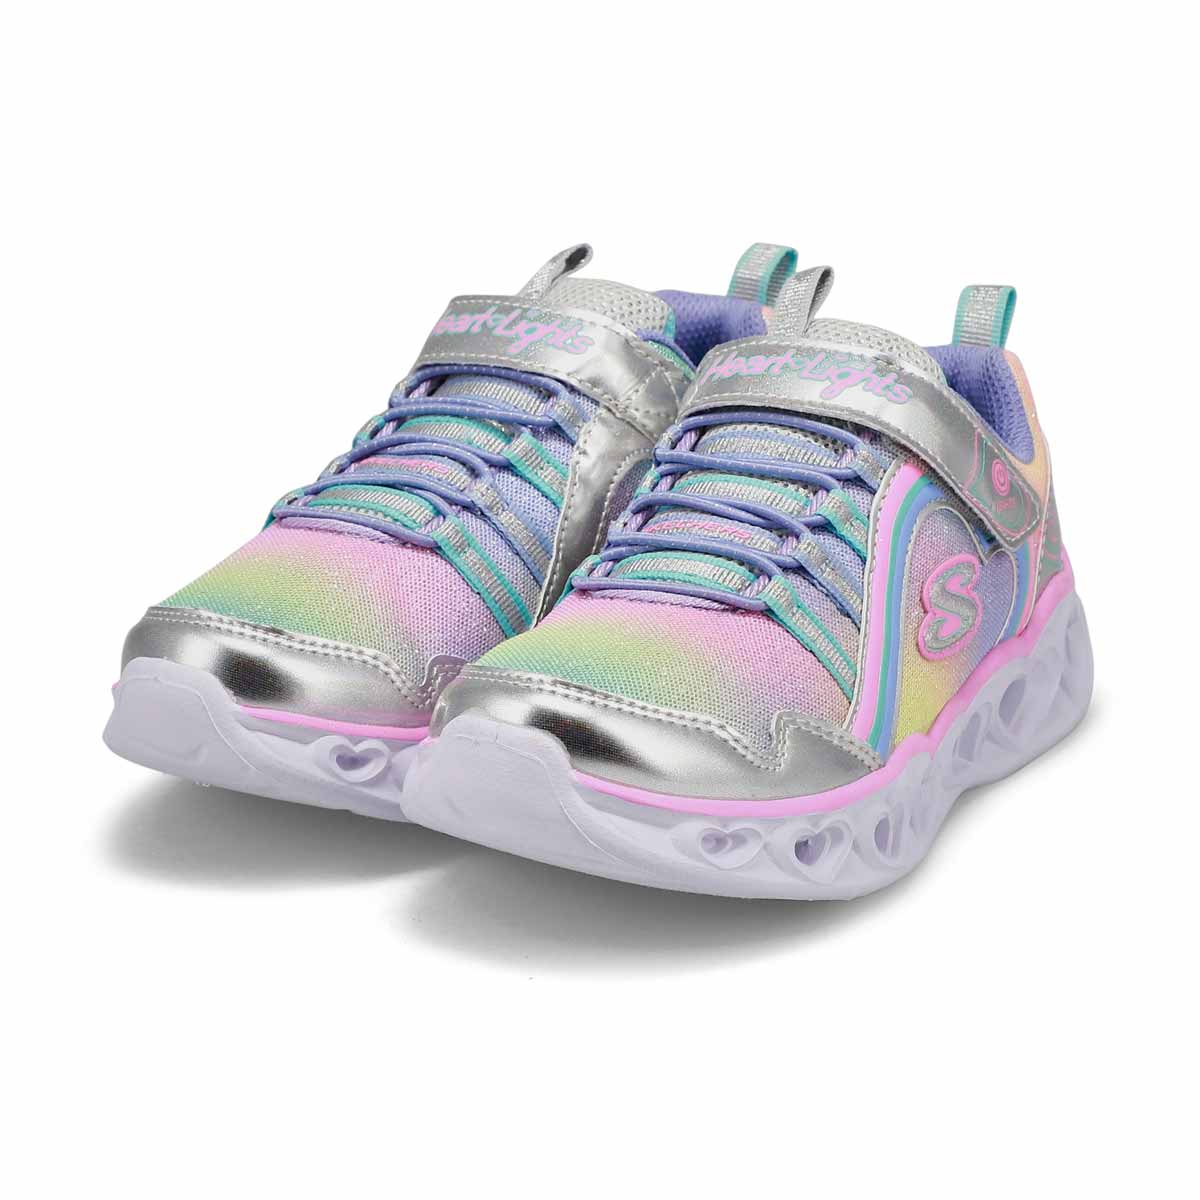 Girls' Heart Lights Rainbow Lux Sneakers - Slv/Mlt